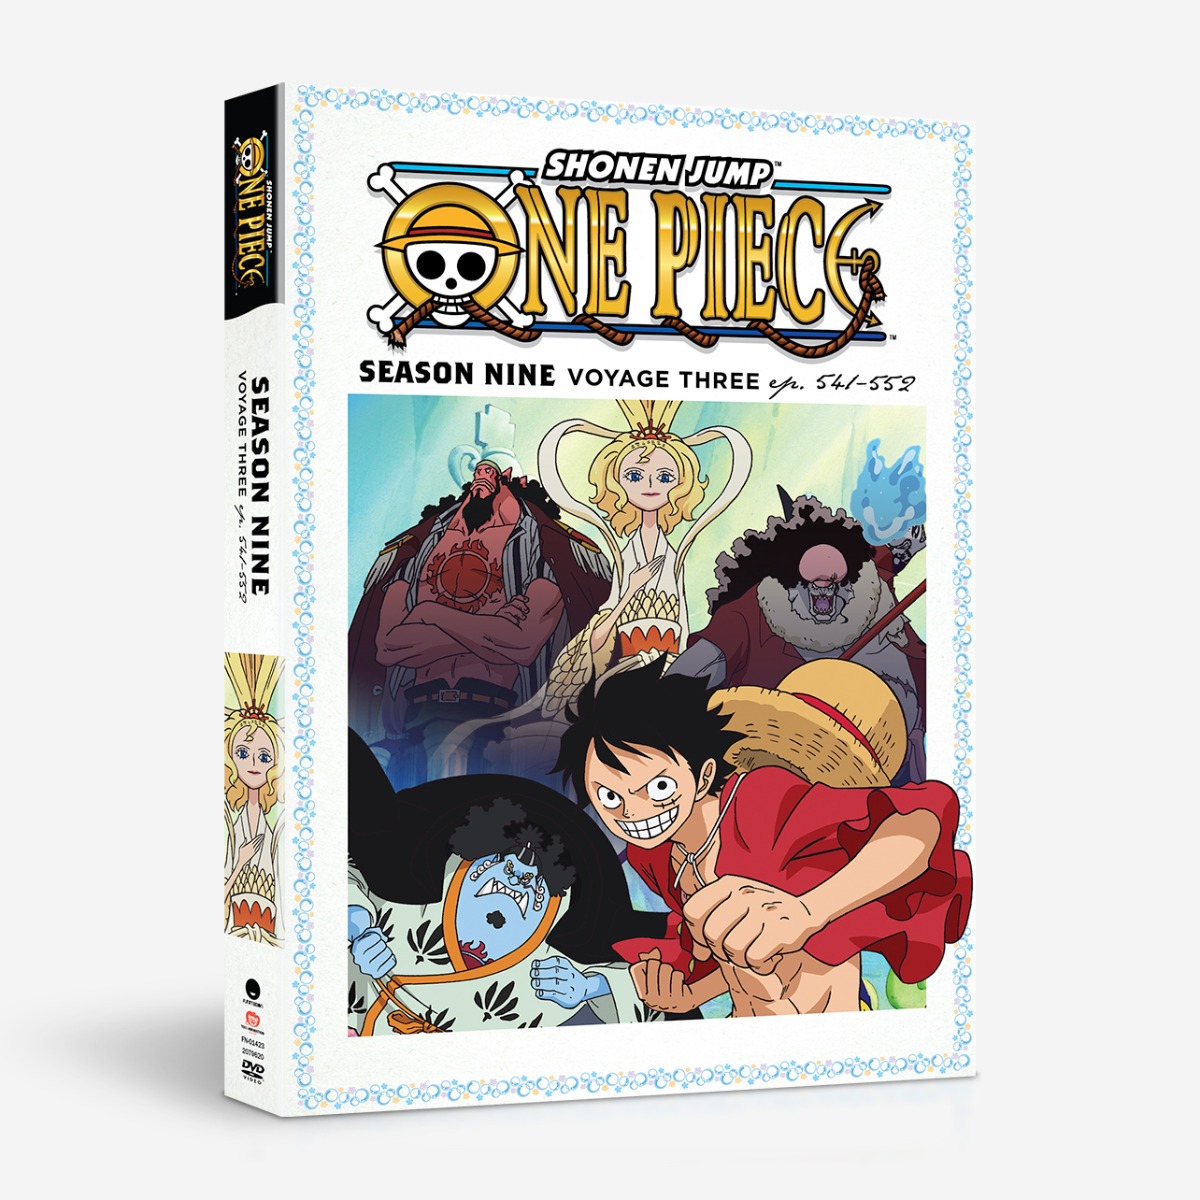 One Piece - Season 9 - Voyage 3 - DVD image count 0